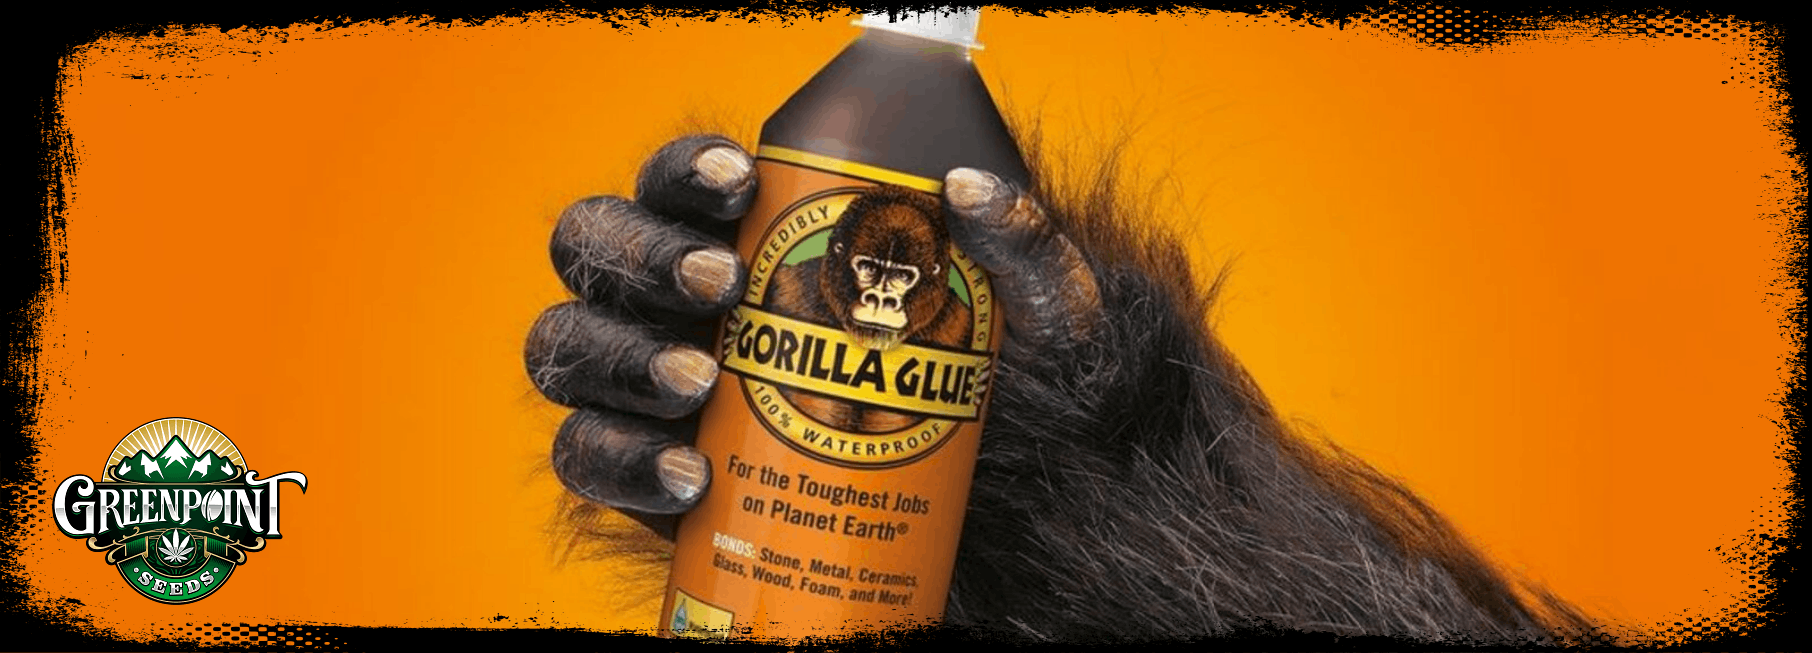 Gorilla Glue #4 - Greenpoint Seeds